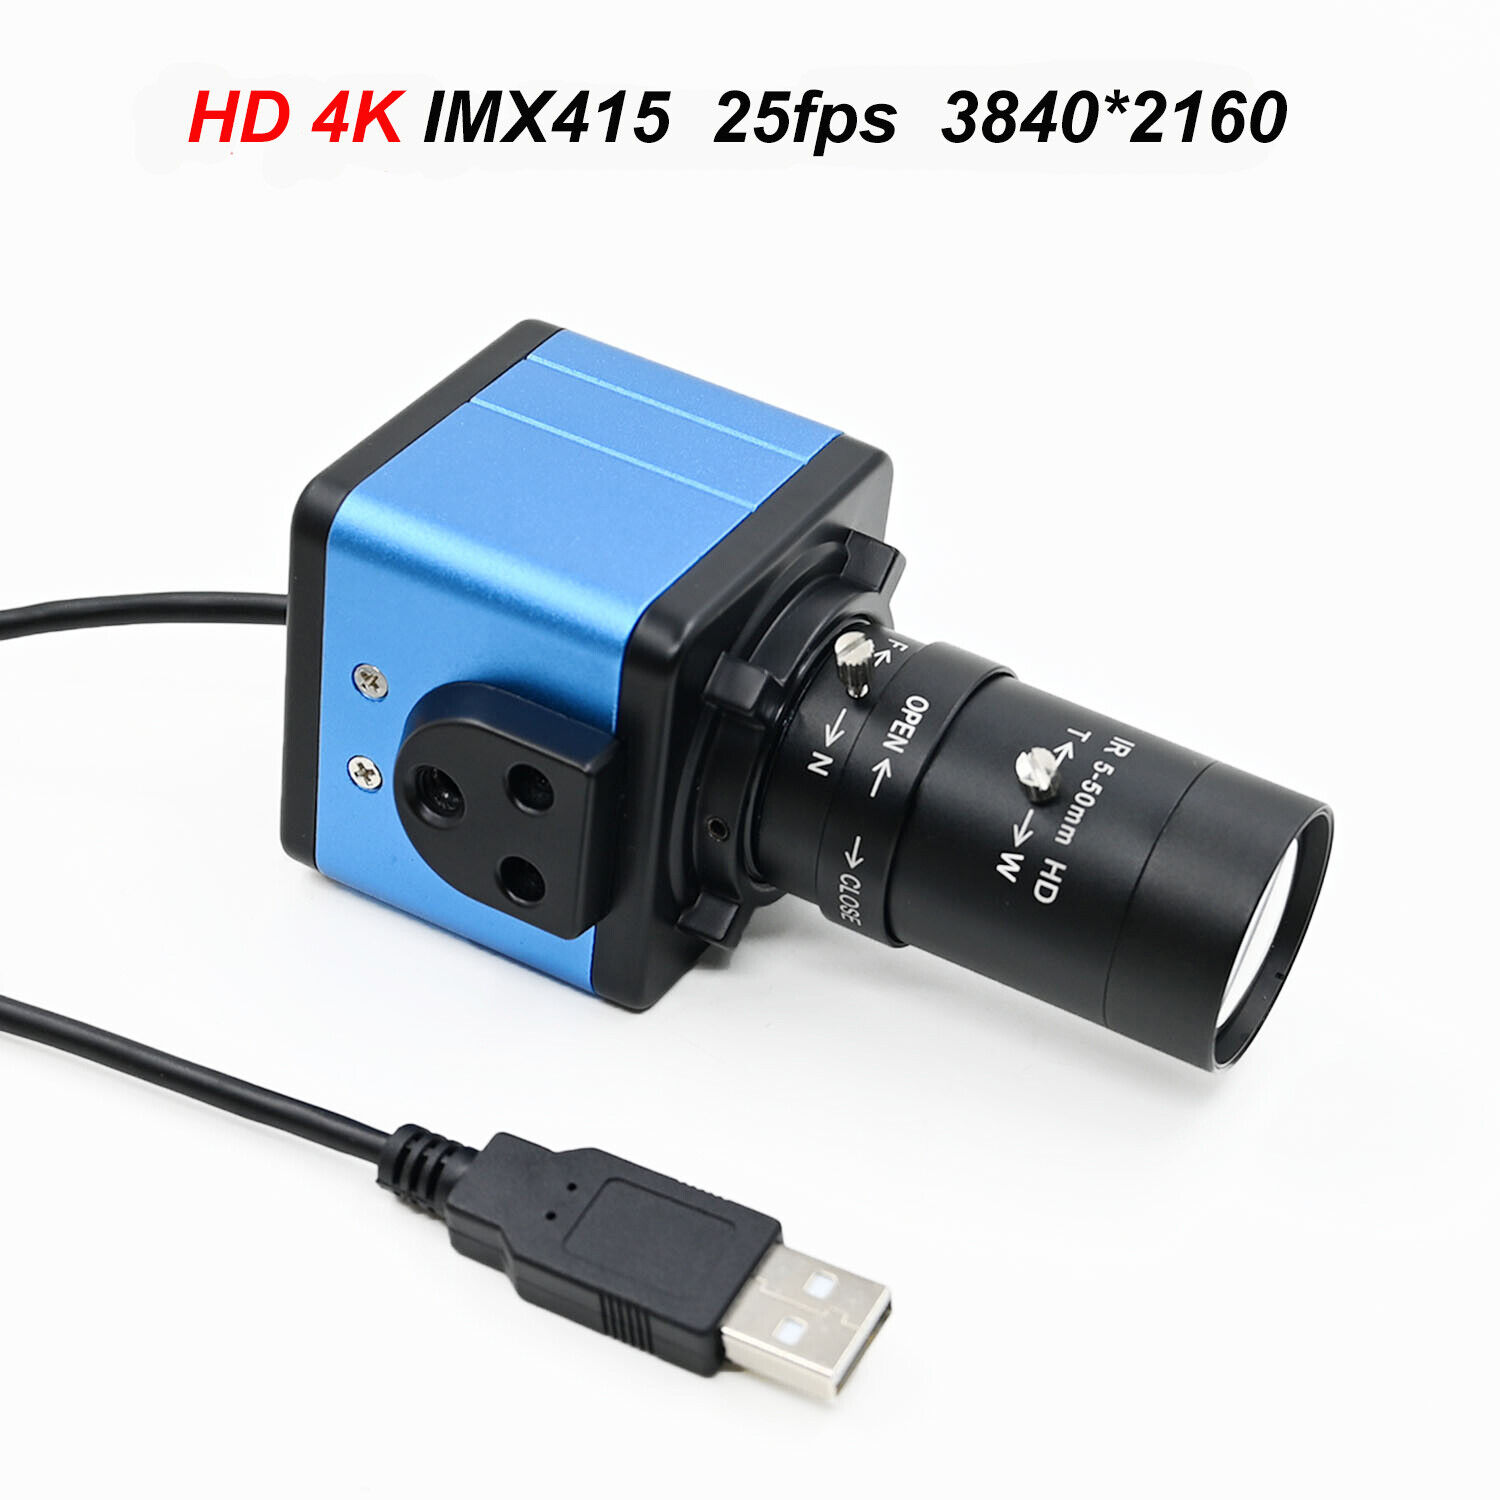 HD 4K USB Webcam IMX415, Camera With 5-50mm Varifocal CS Lens, 25fps 3840x2160